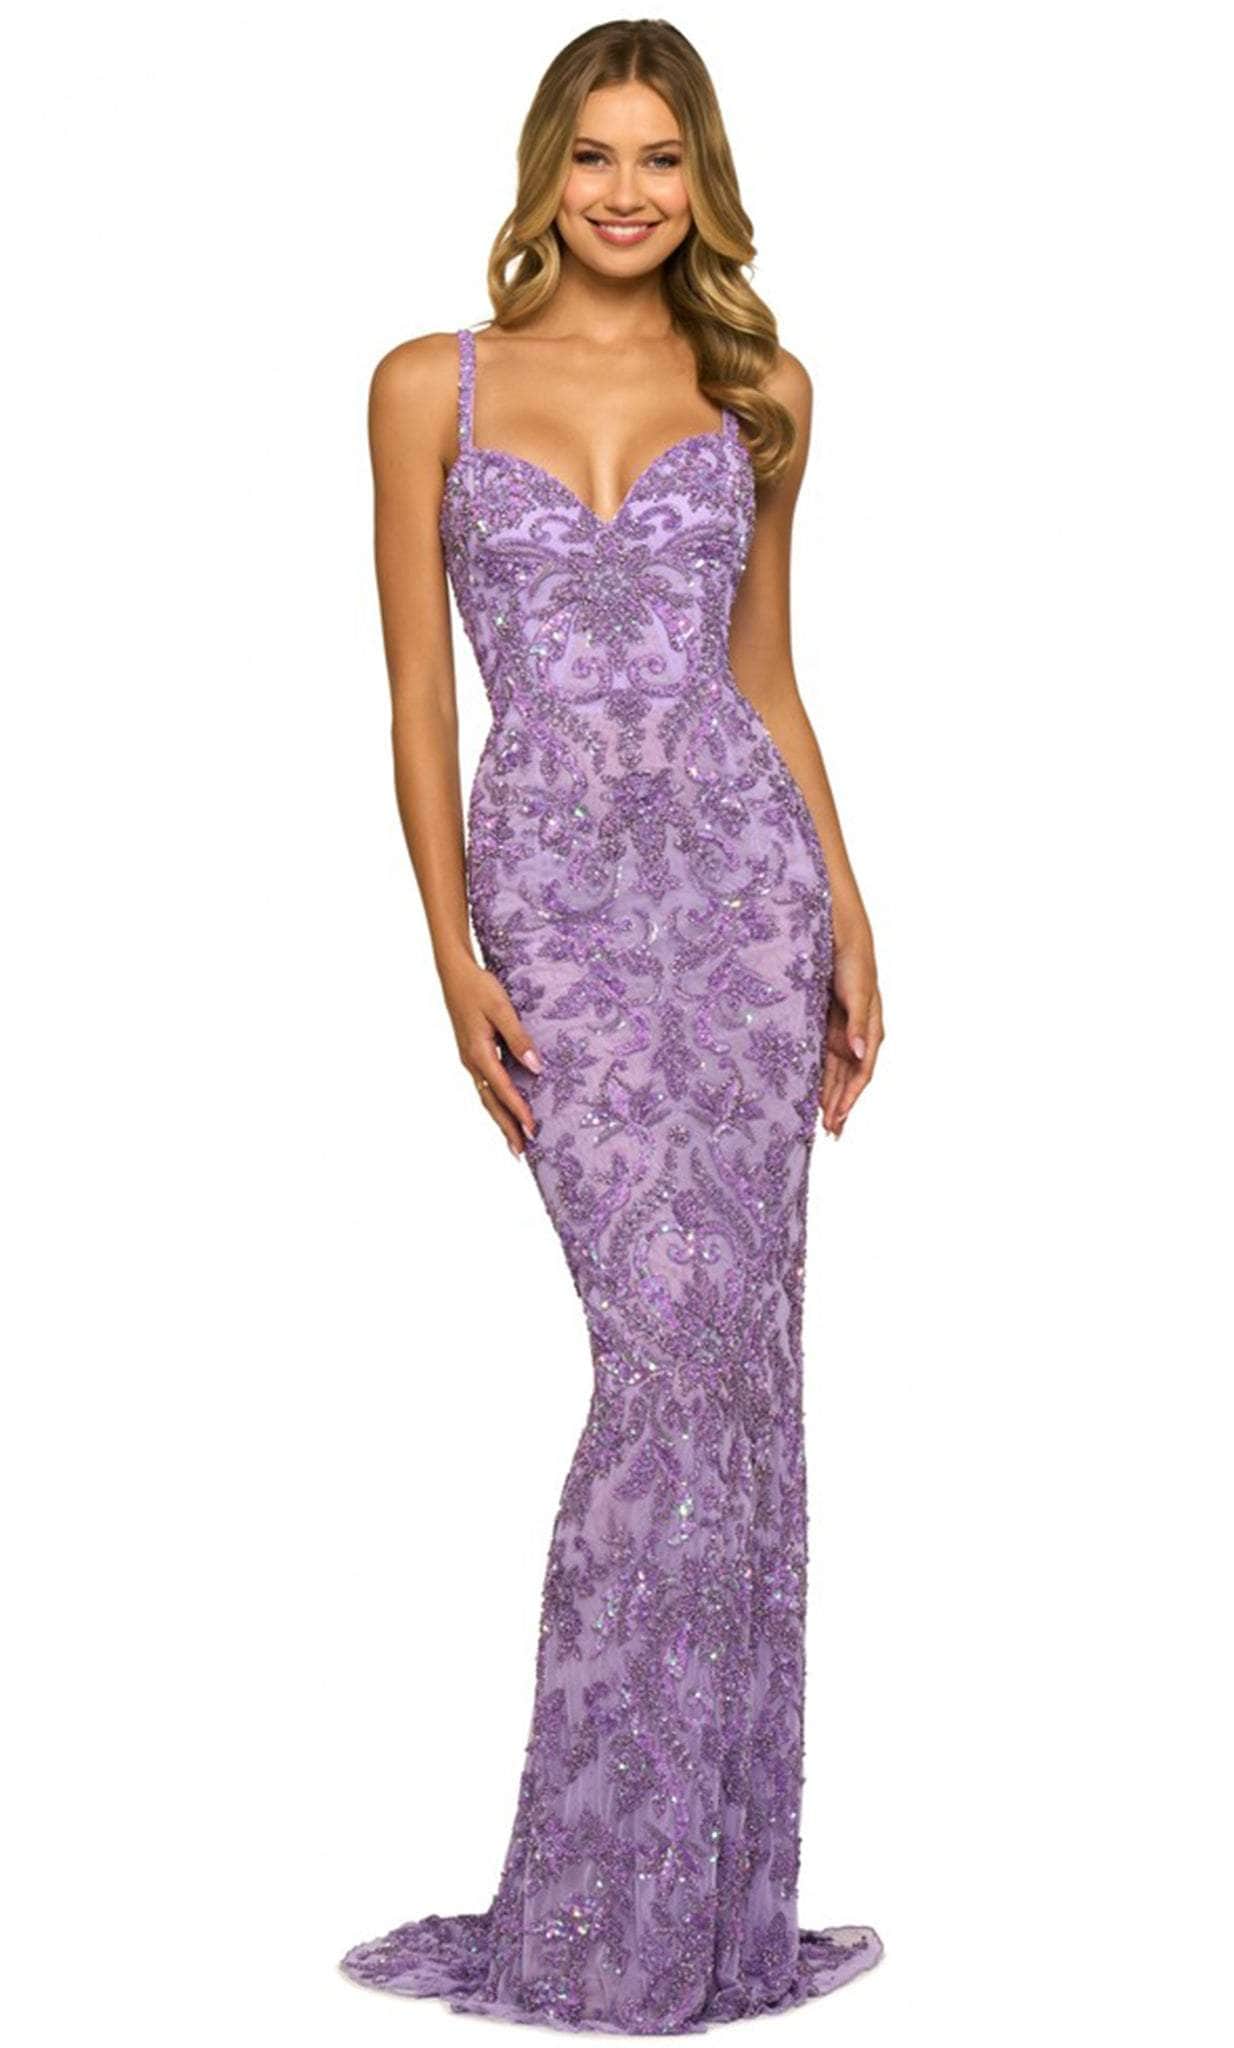 Sherri Hill 55452 - Sweetheart Neck Dress Evening Dresses 000 / Lilac